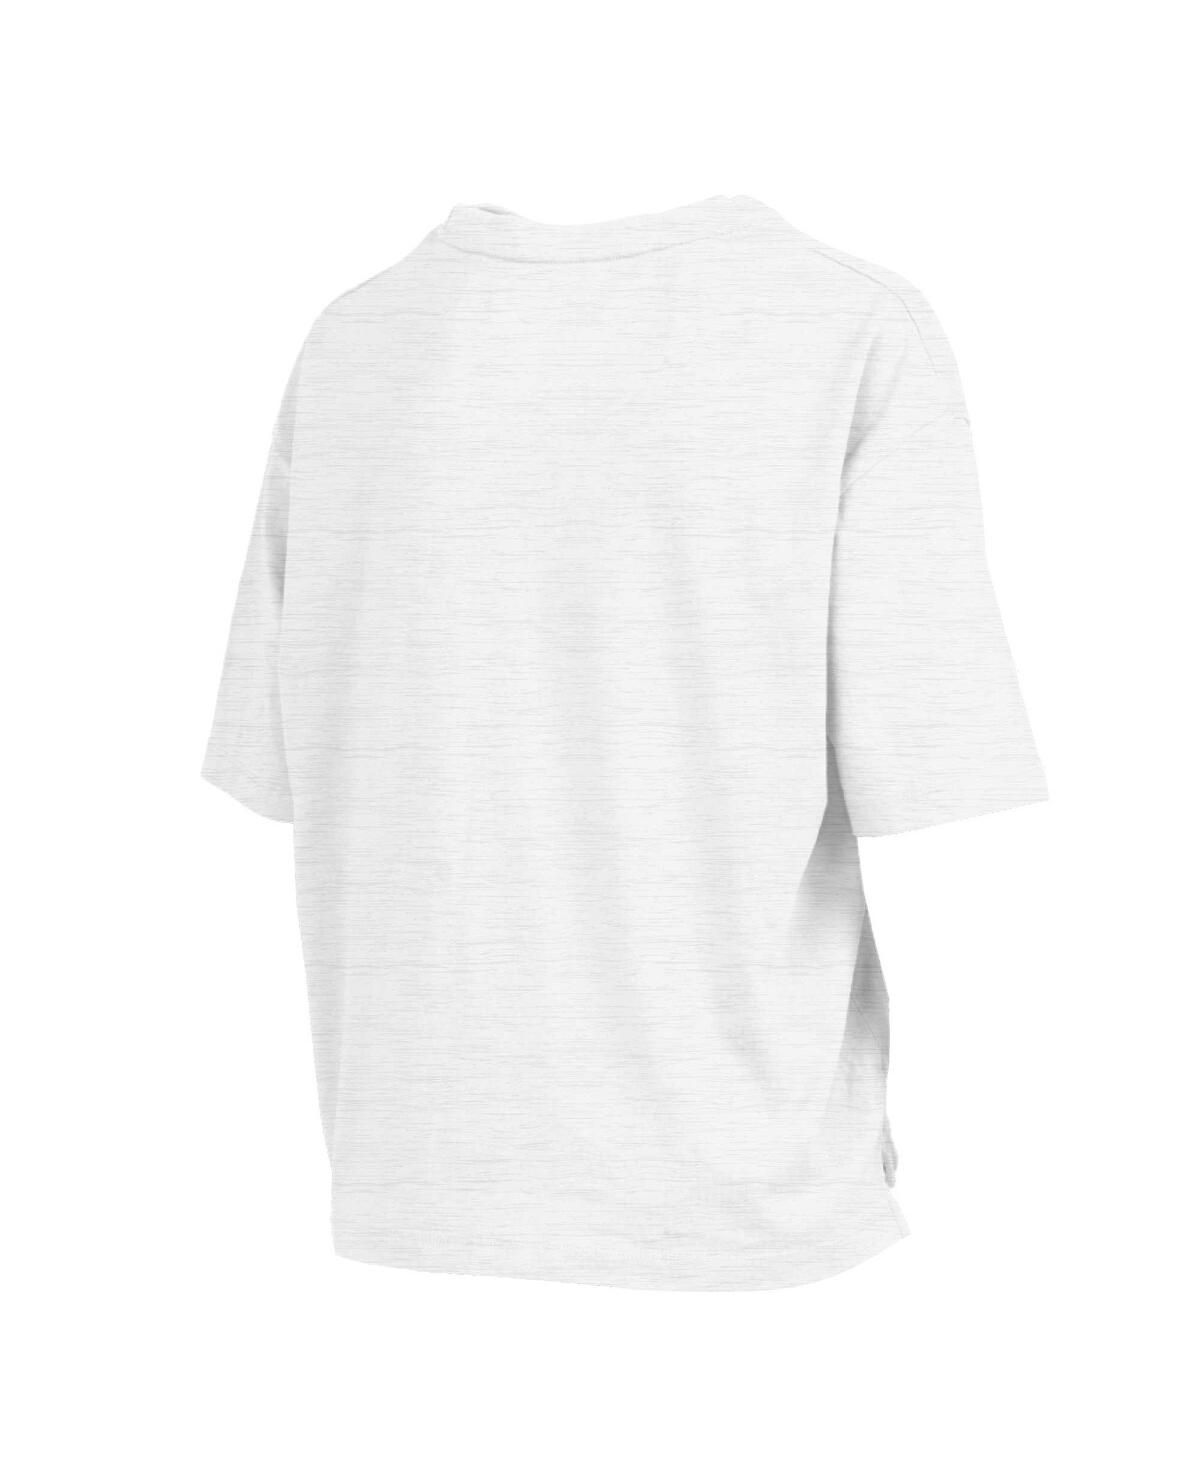 Shop Pressbox Women's  White Texas Longhorns Motley Crew Chain Stitch Slub Waist Length Boxy T-shirt